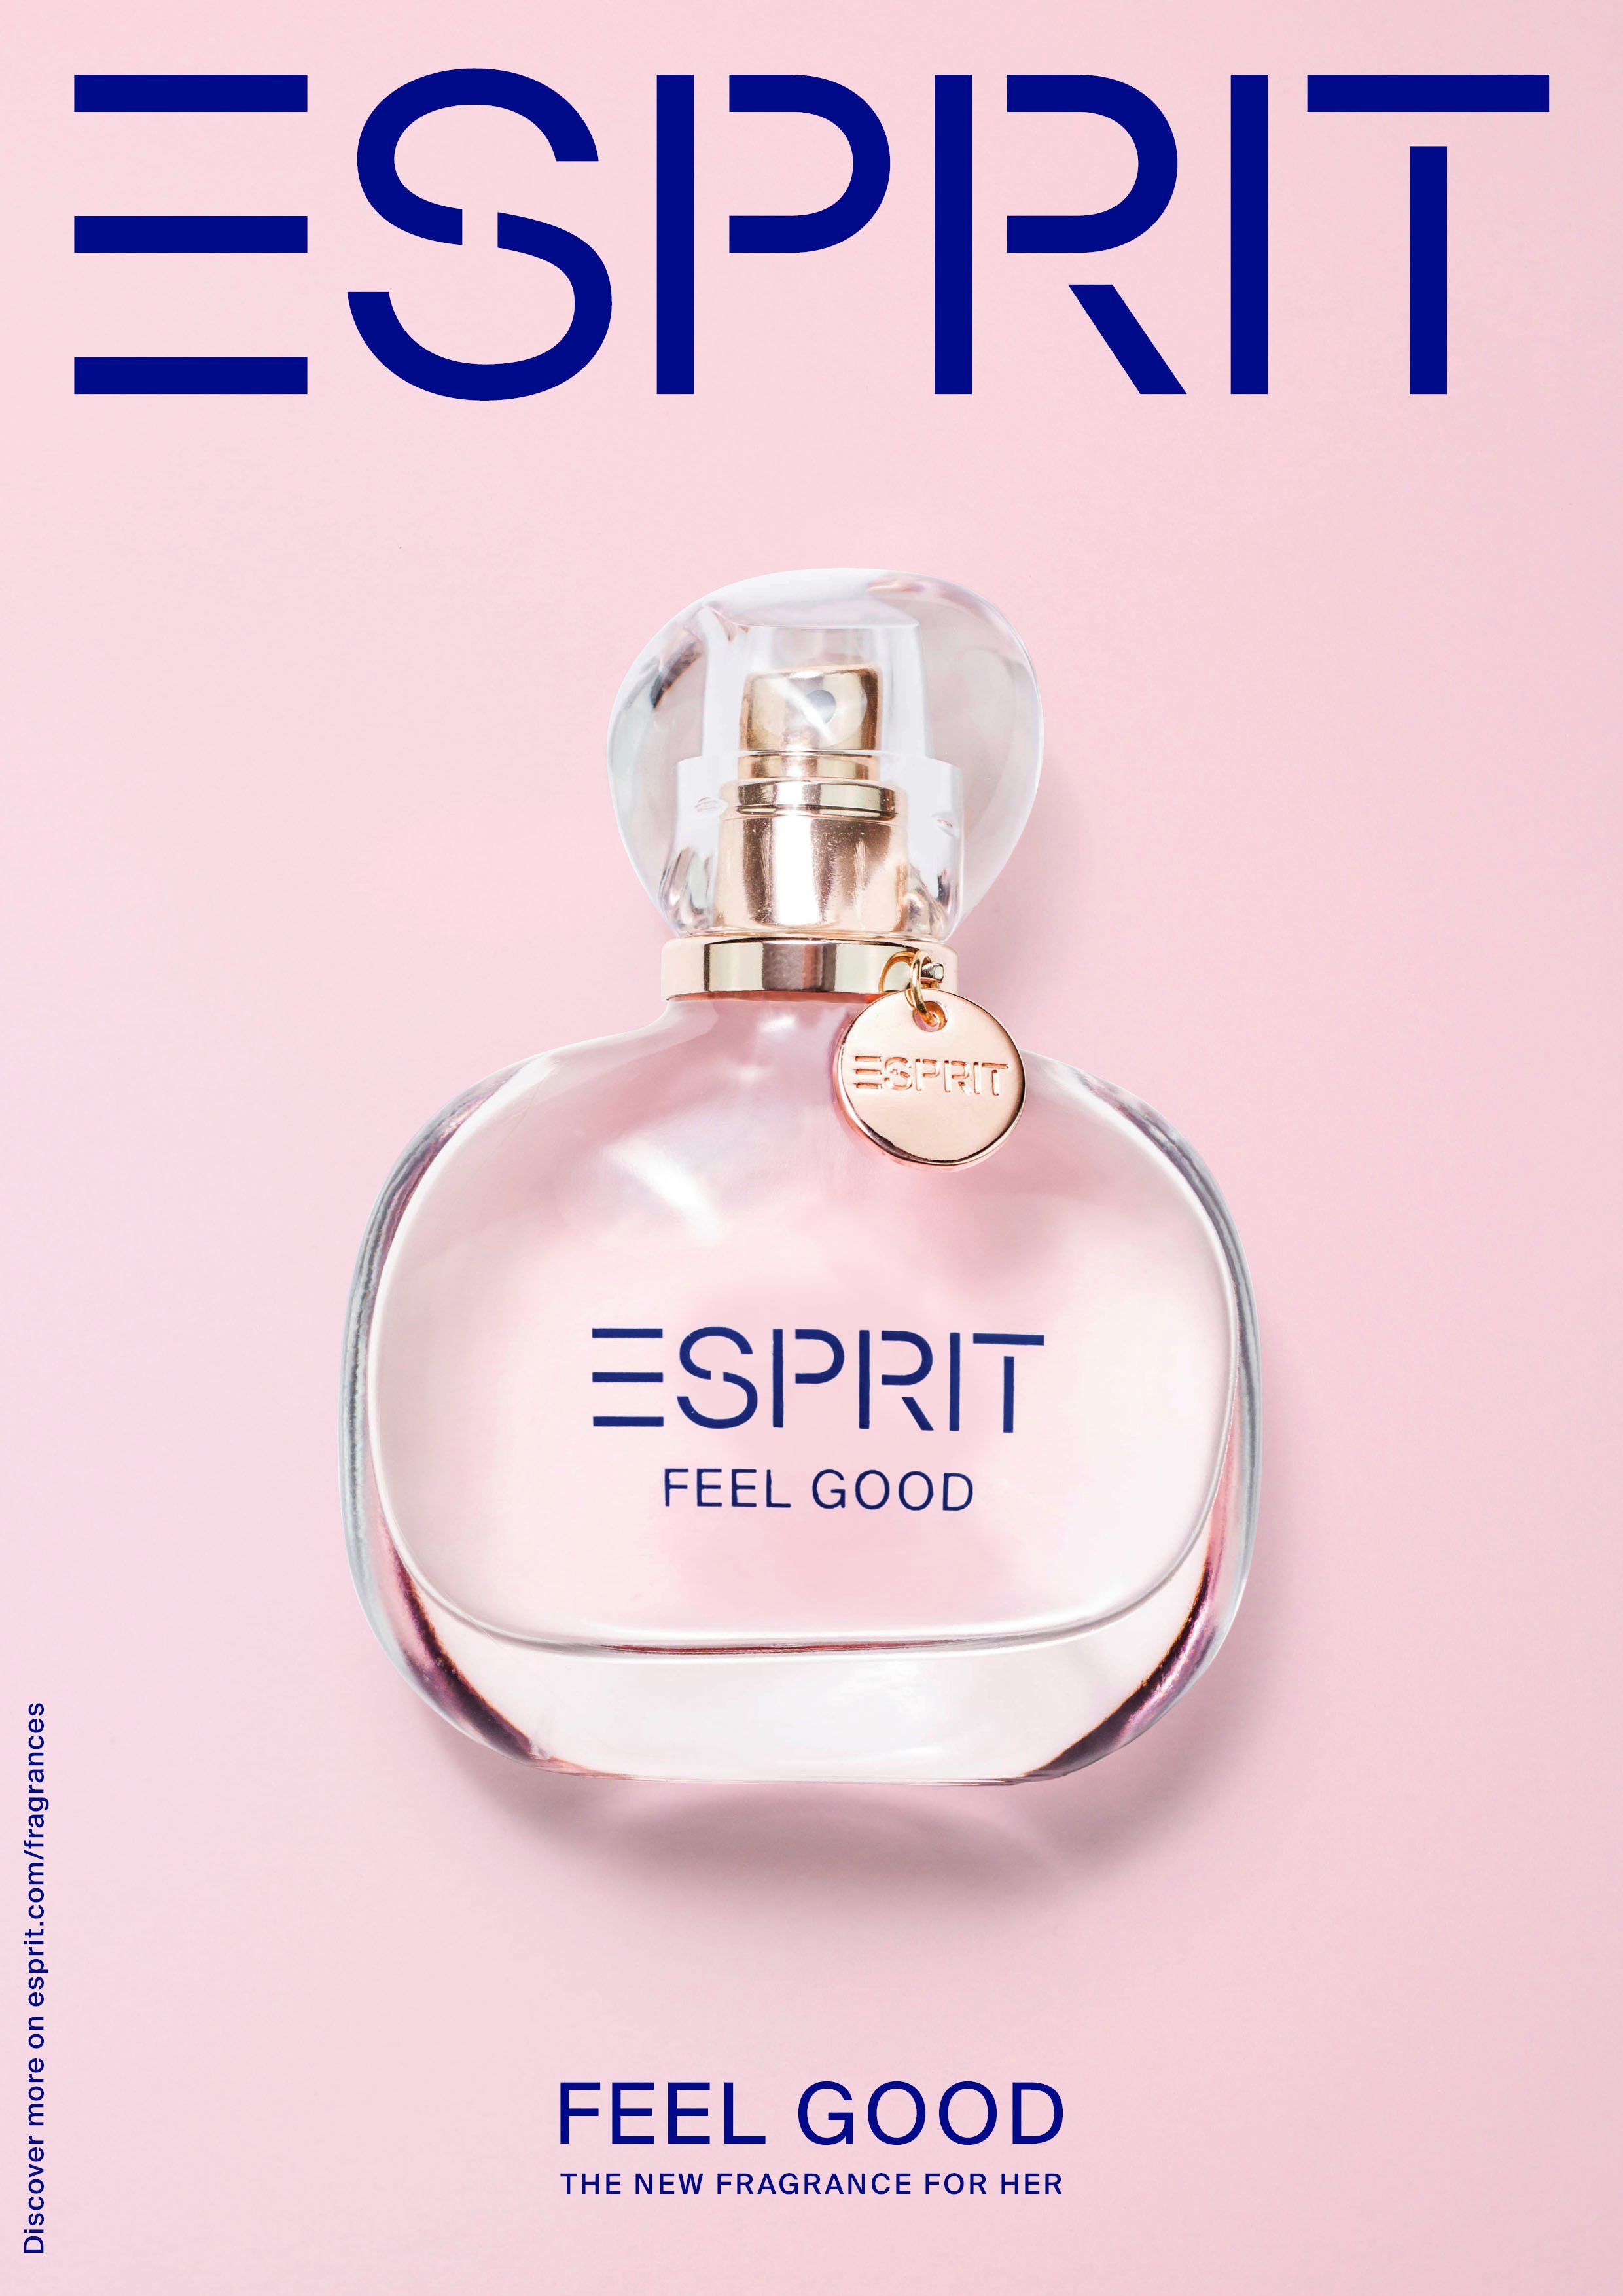 Esprit Eau Parfum GOOD de EdP 20 her for ml FEEL